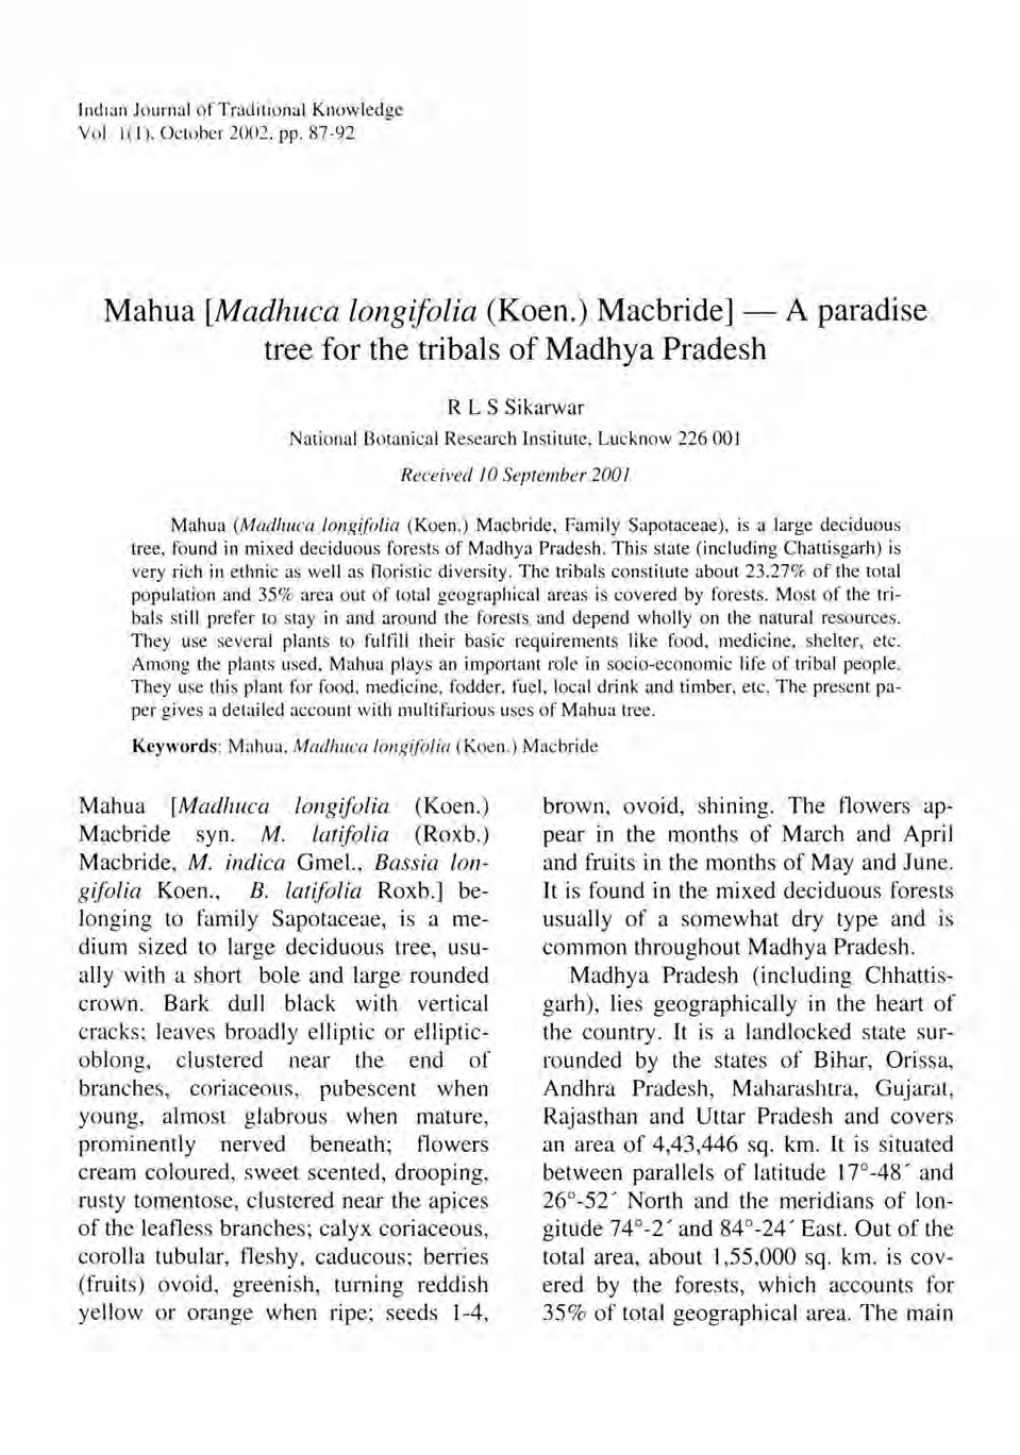 Mahua [Madhuca Longifolia (Koen.) Macbride] - a Paradise Tree for the Tribals of Madhya Pradesh